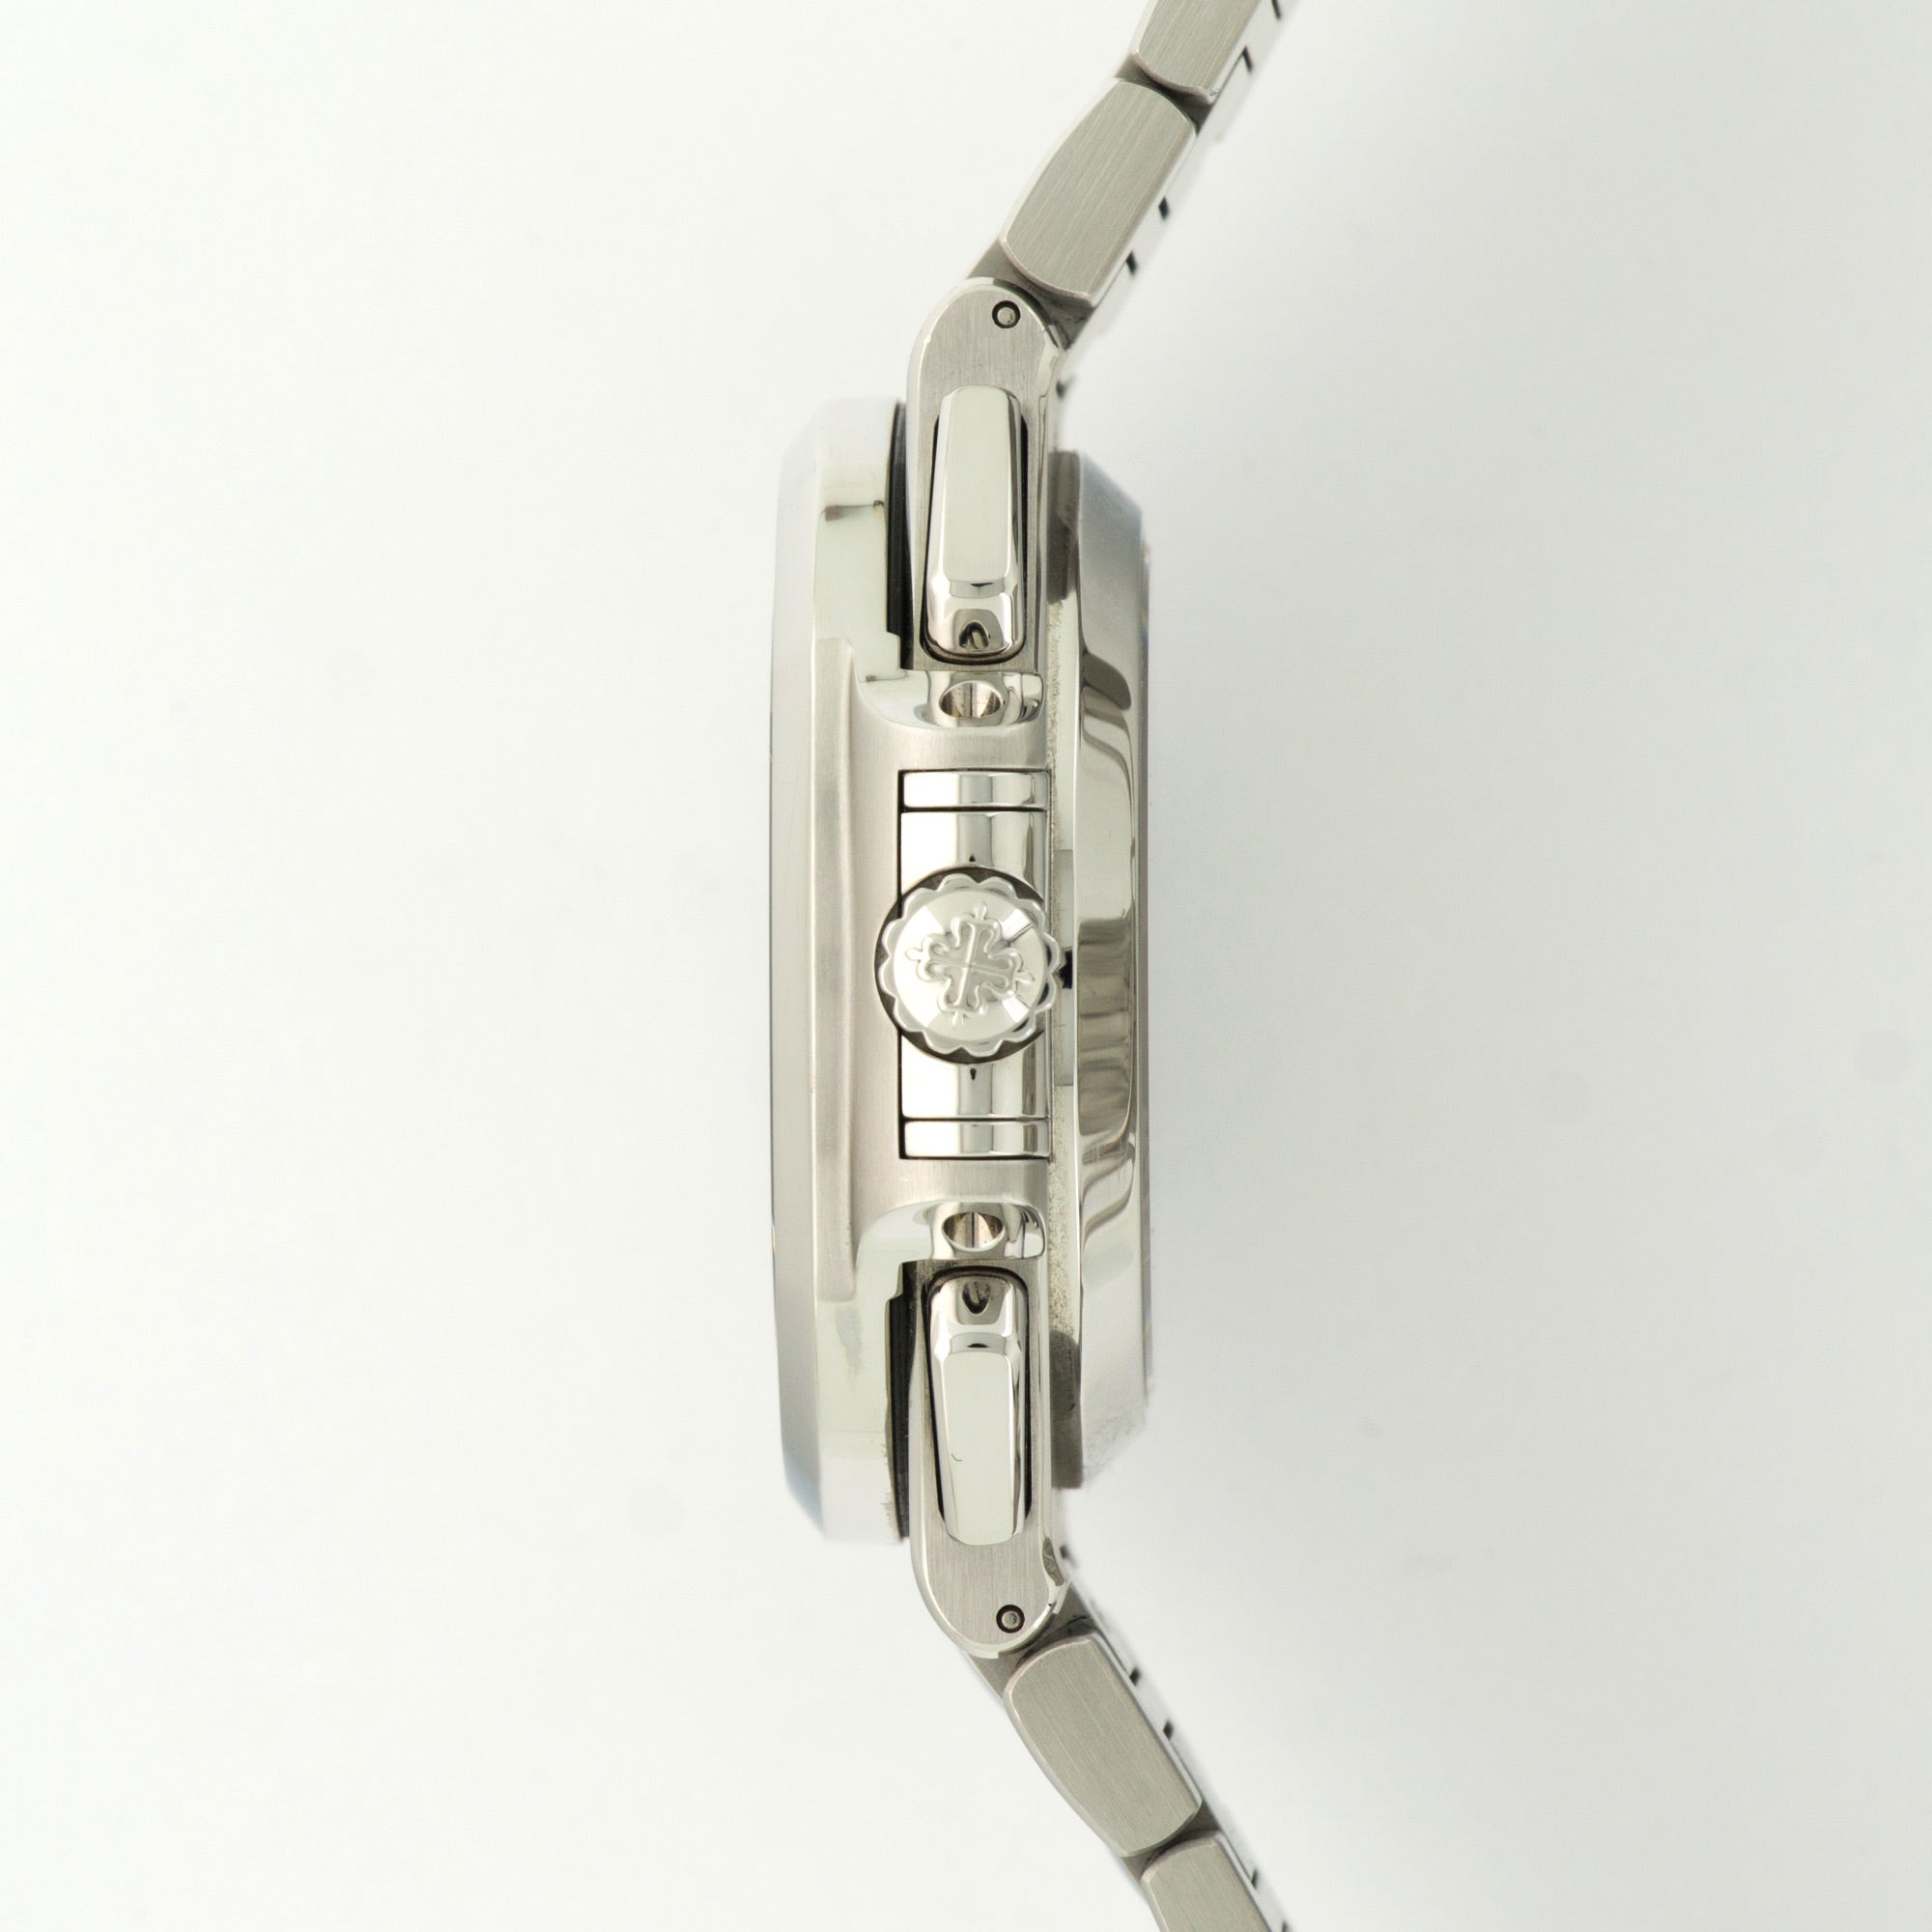 Patek Philippe - Patek Philippe Nautilus Chronograph Black Watch Ref. 5980 - The Keystone Watches